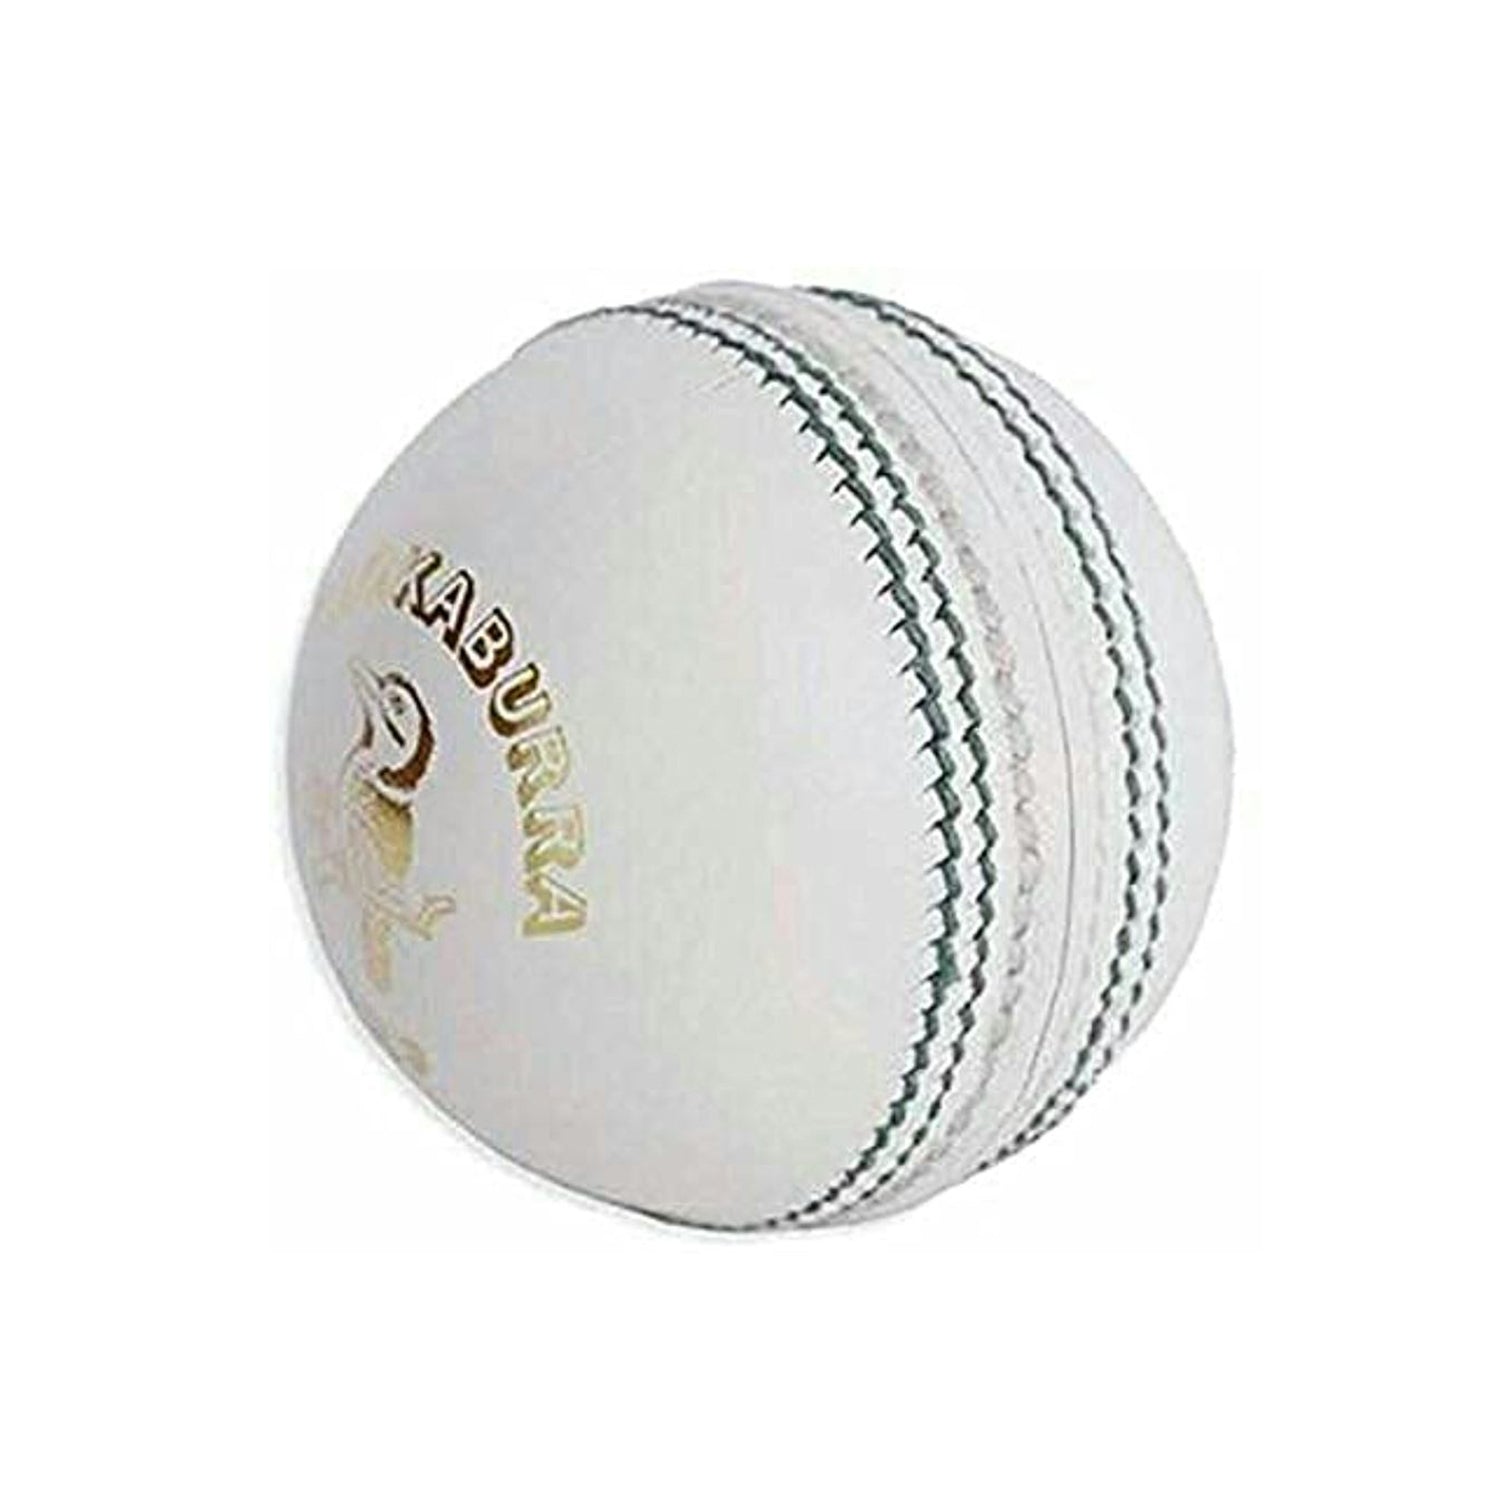 Kookaburra Pace Cricket Ball, White